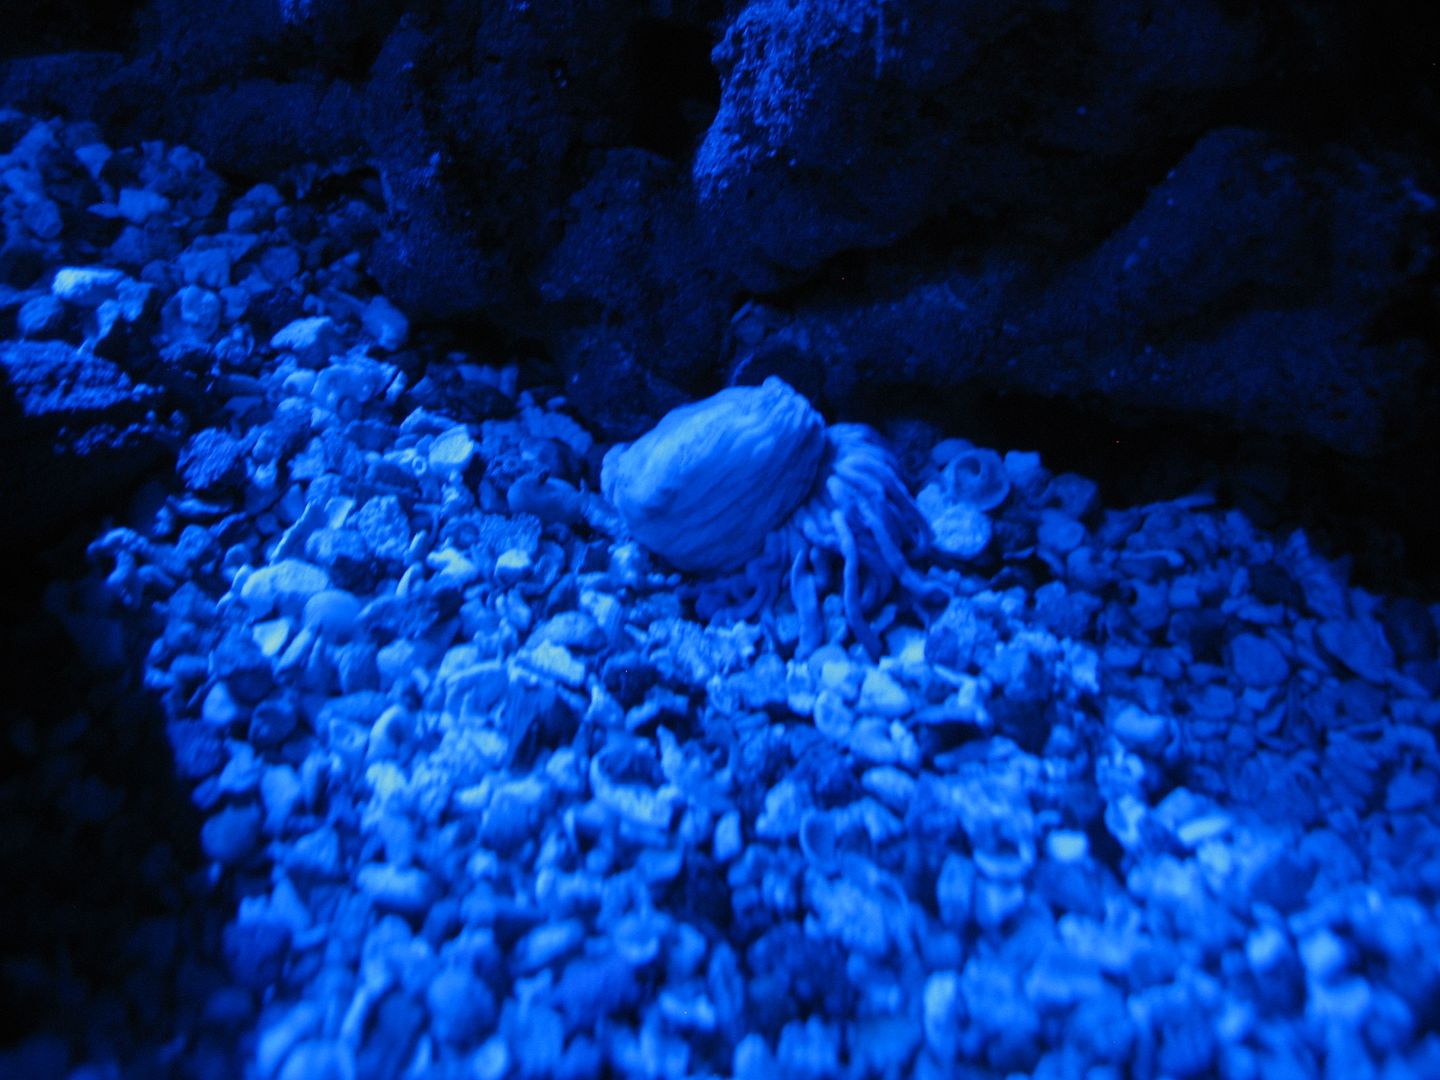 Aquarium_CondyLate_03MAY2012.jpg